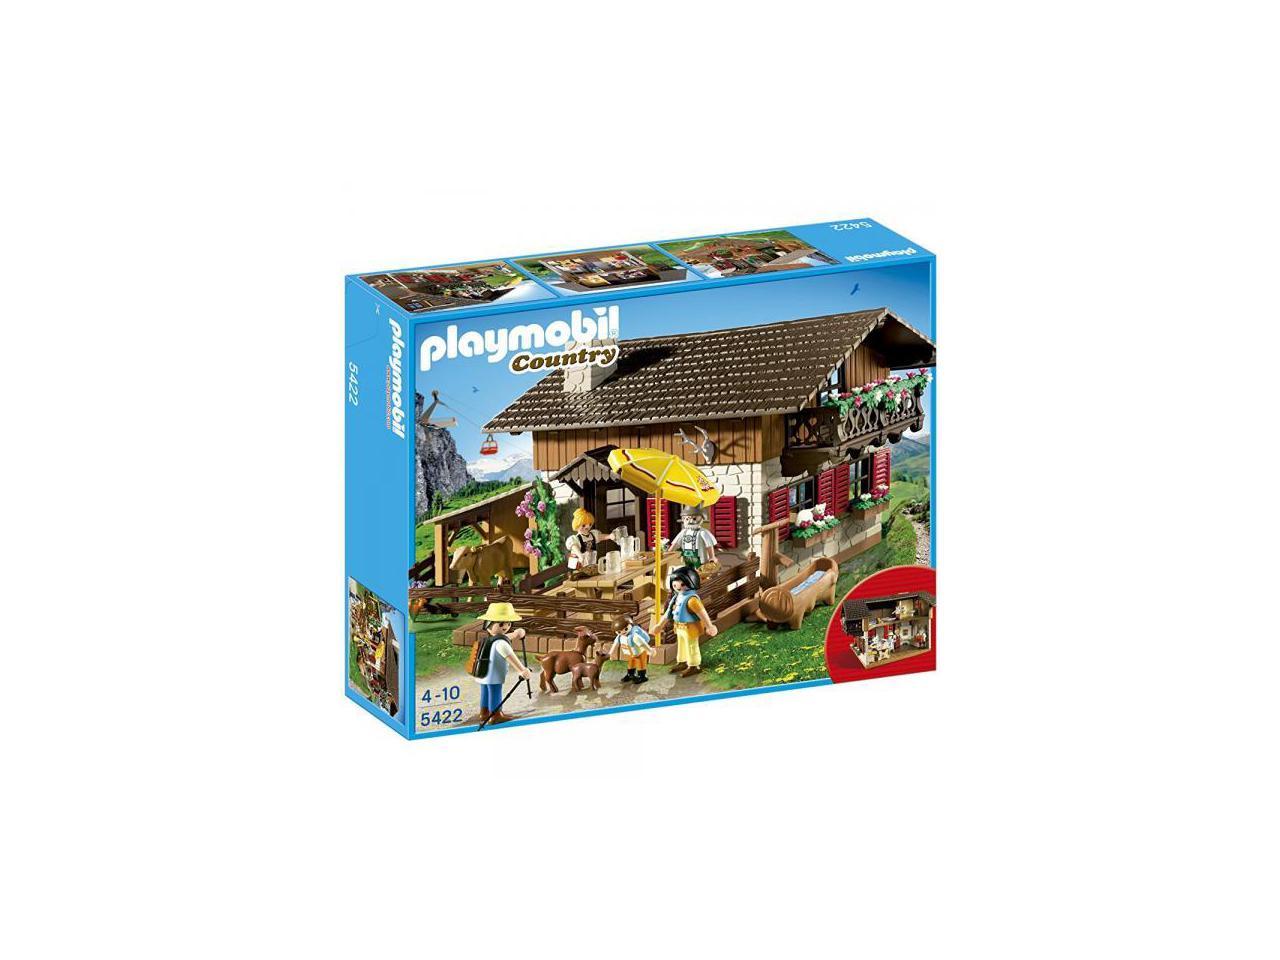 PLAYMOBIL Alpine Lodge Playset - Newegg.com